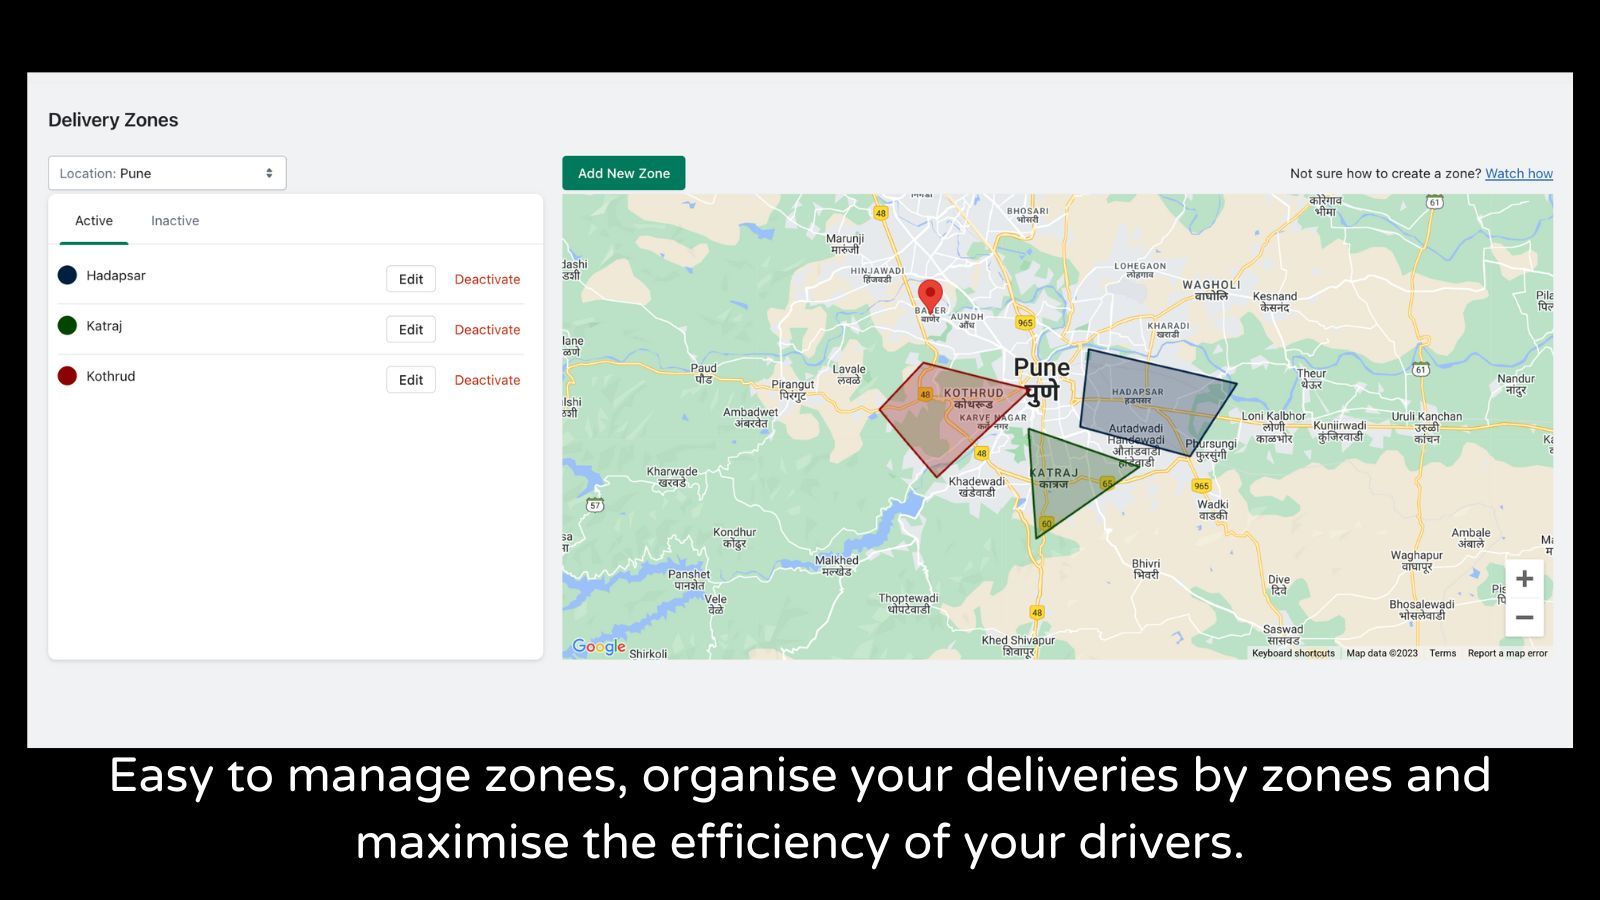 Delivery Zones